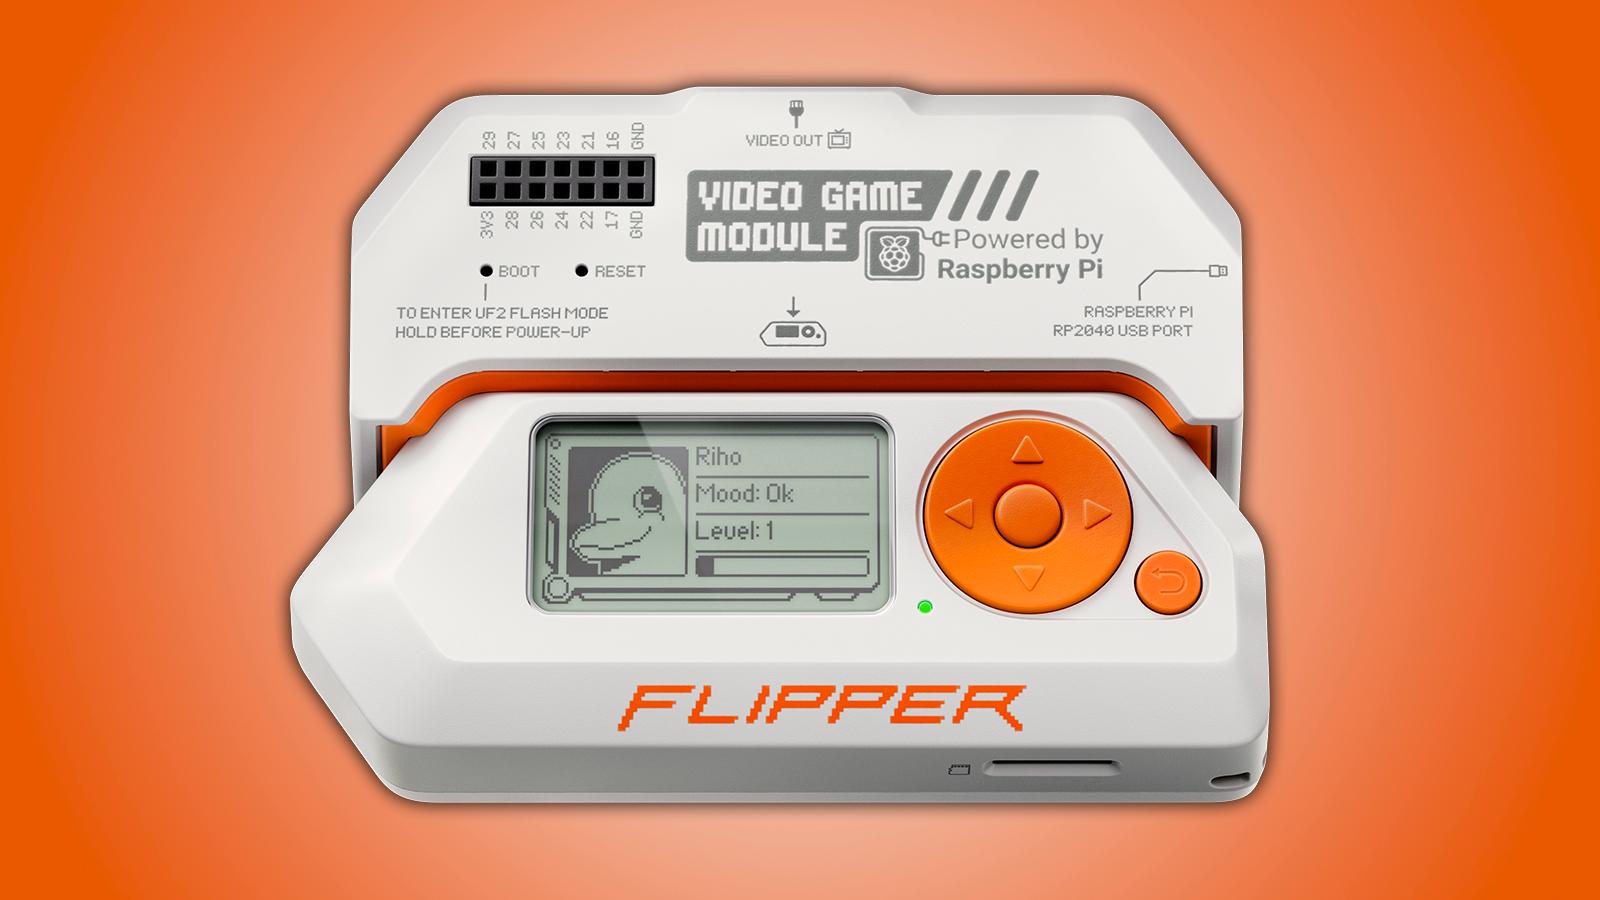 flipper zero video game module connected to the Flipper Zero